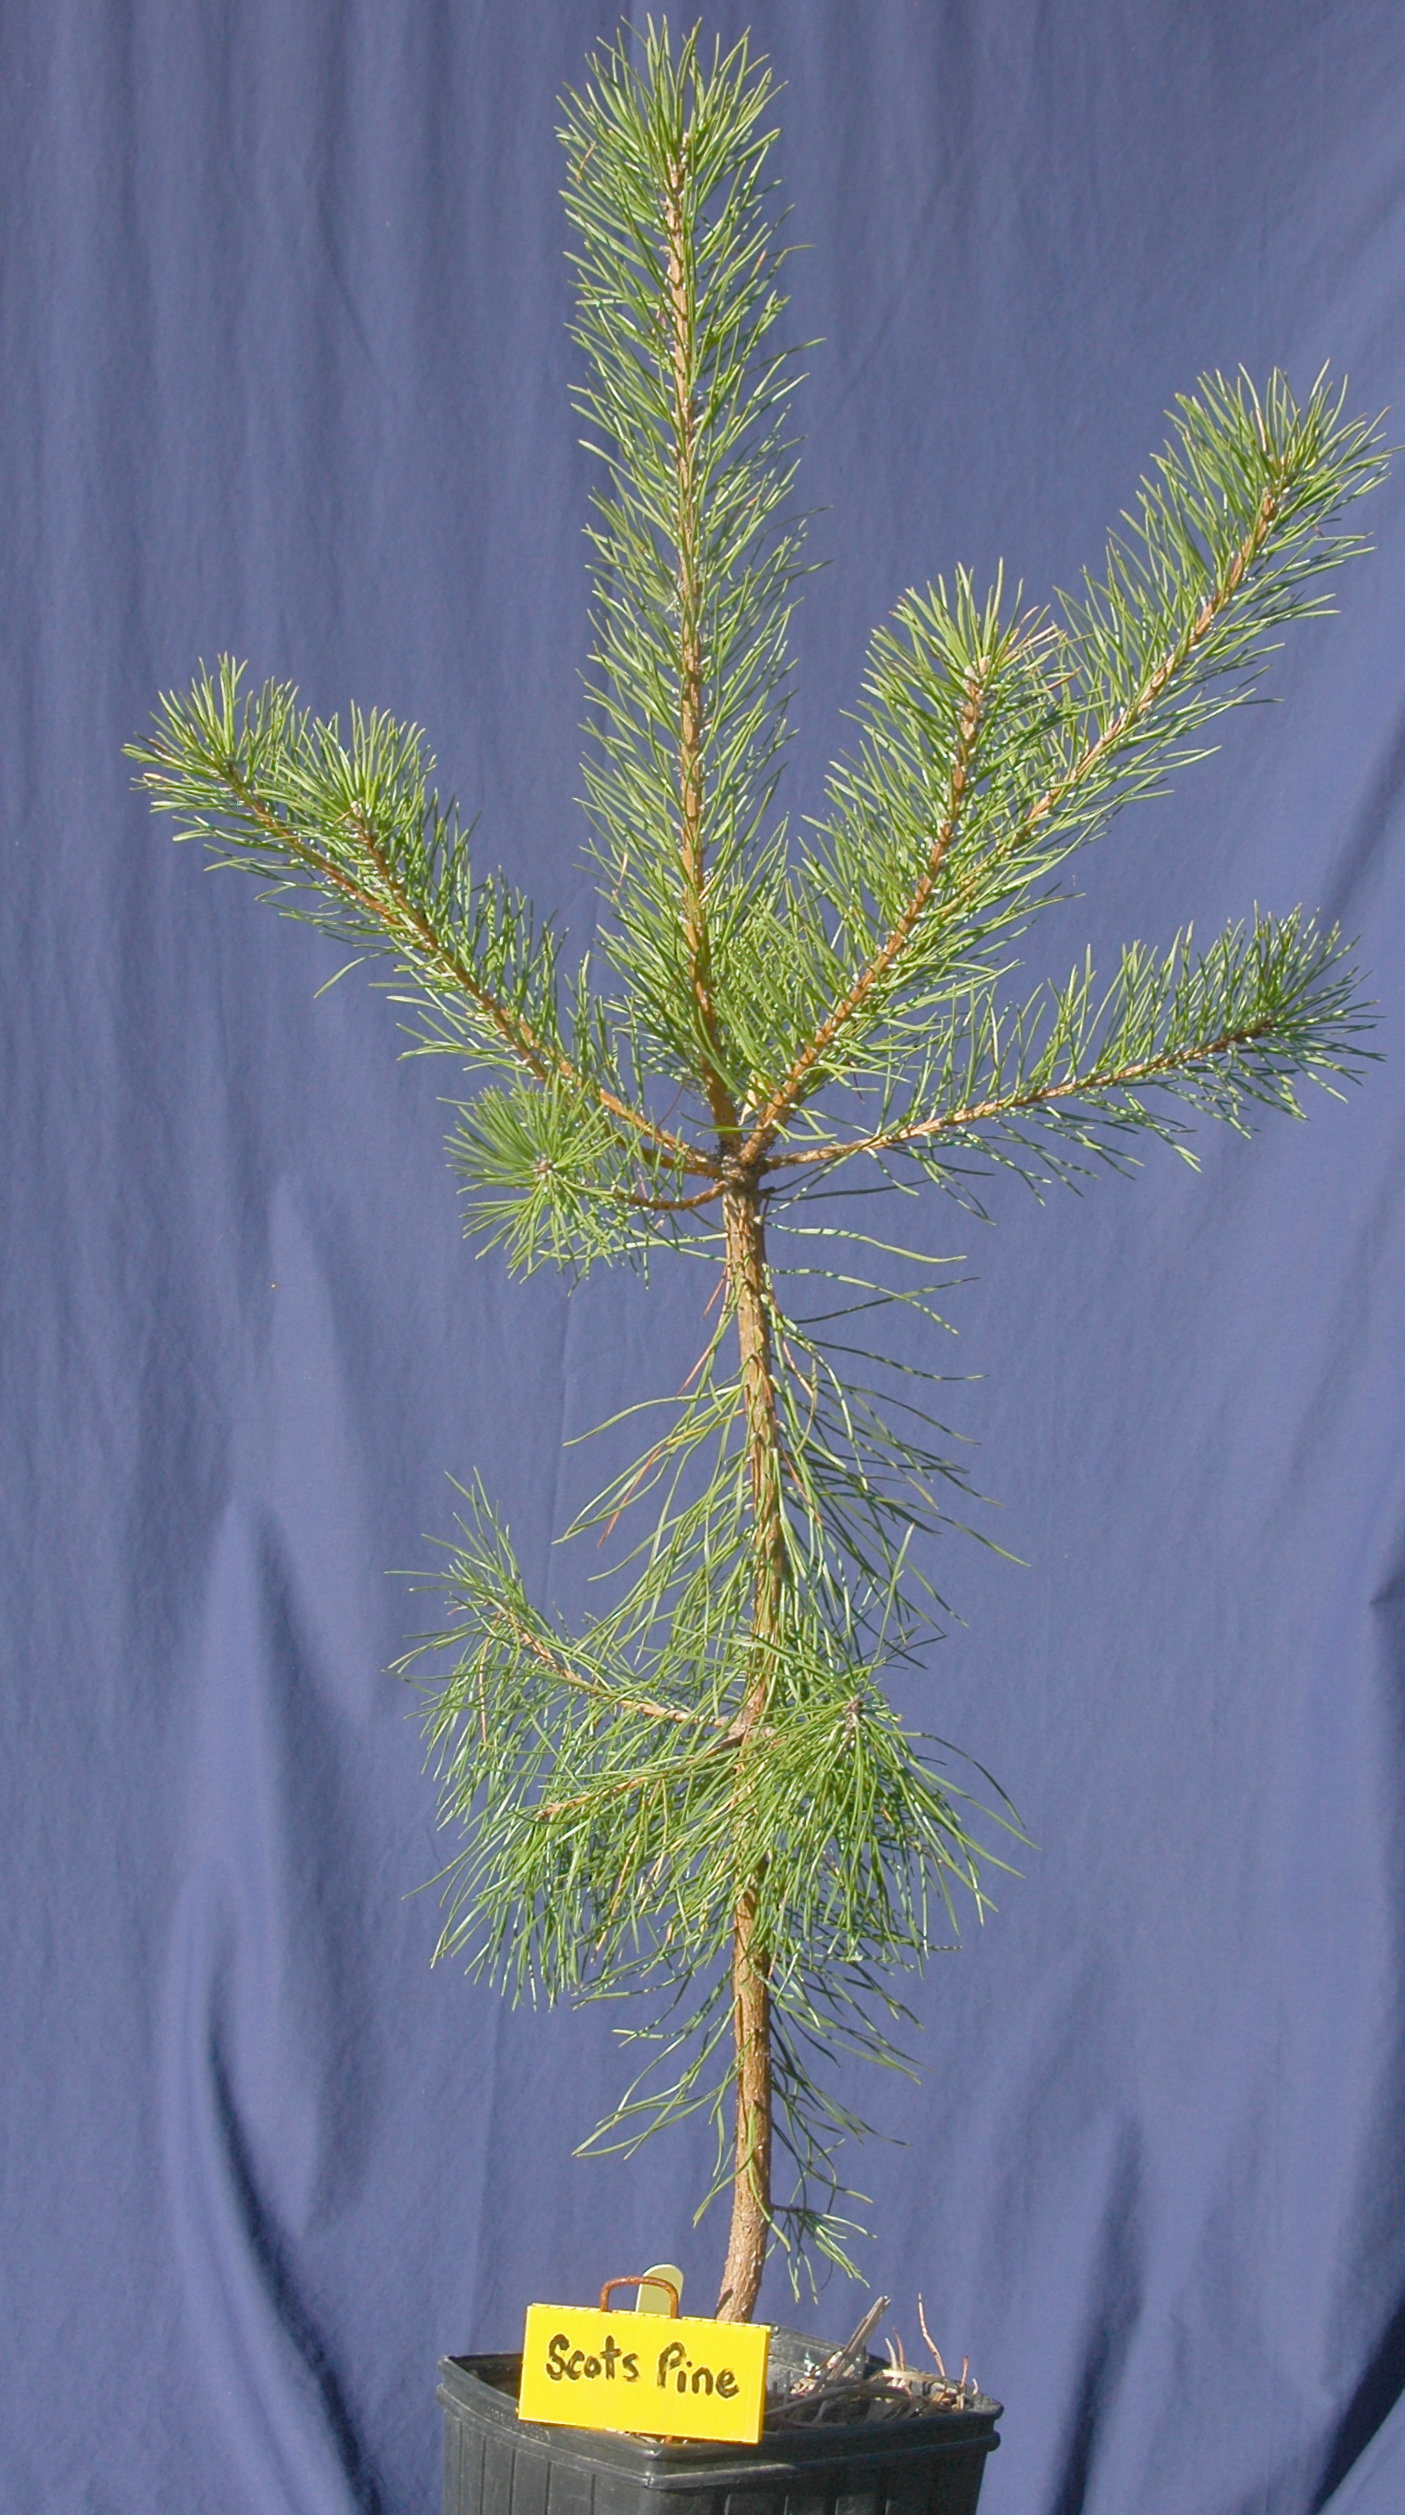 Scots Pine in 2 gallon stuewe pot